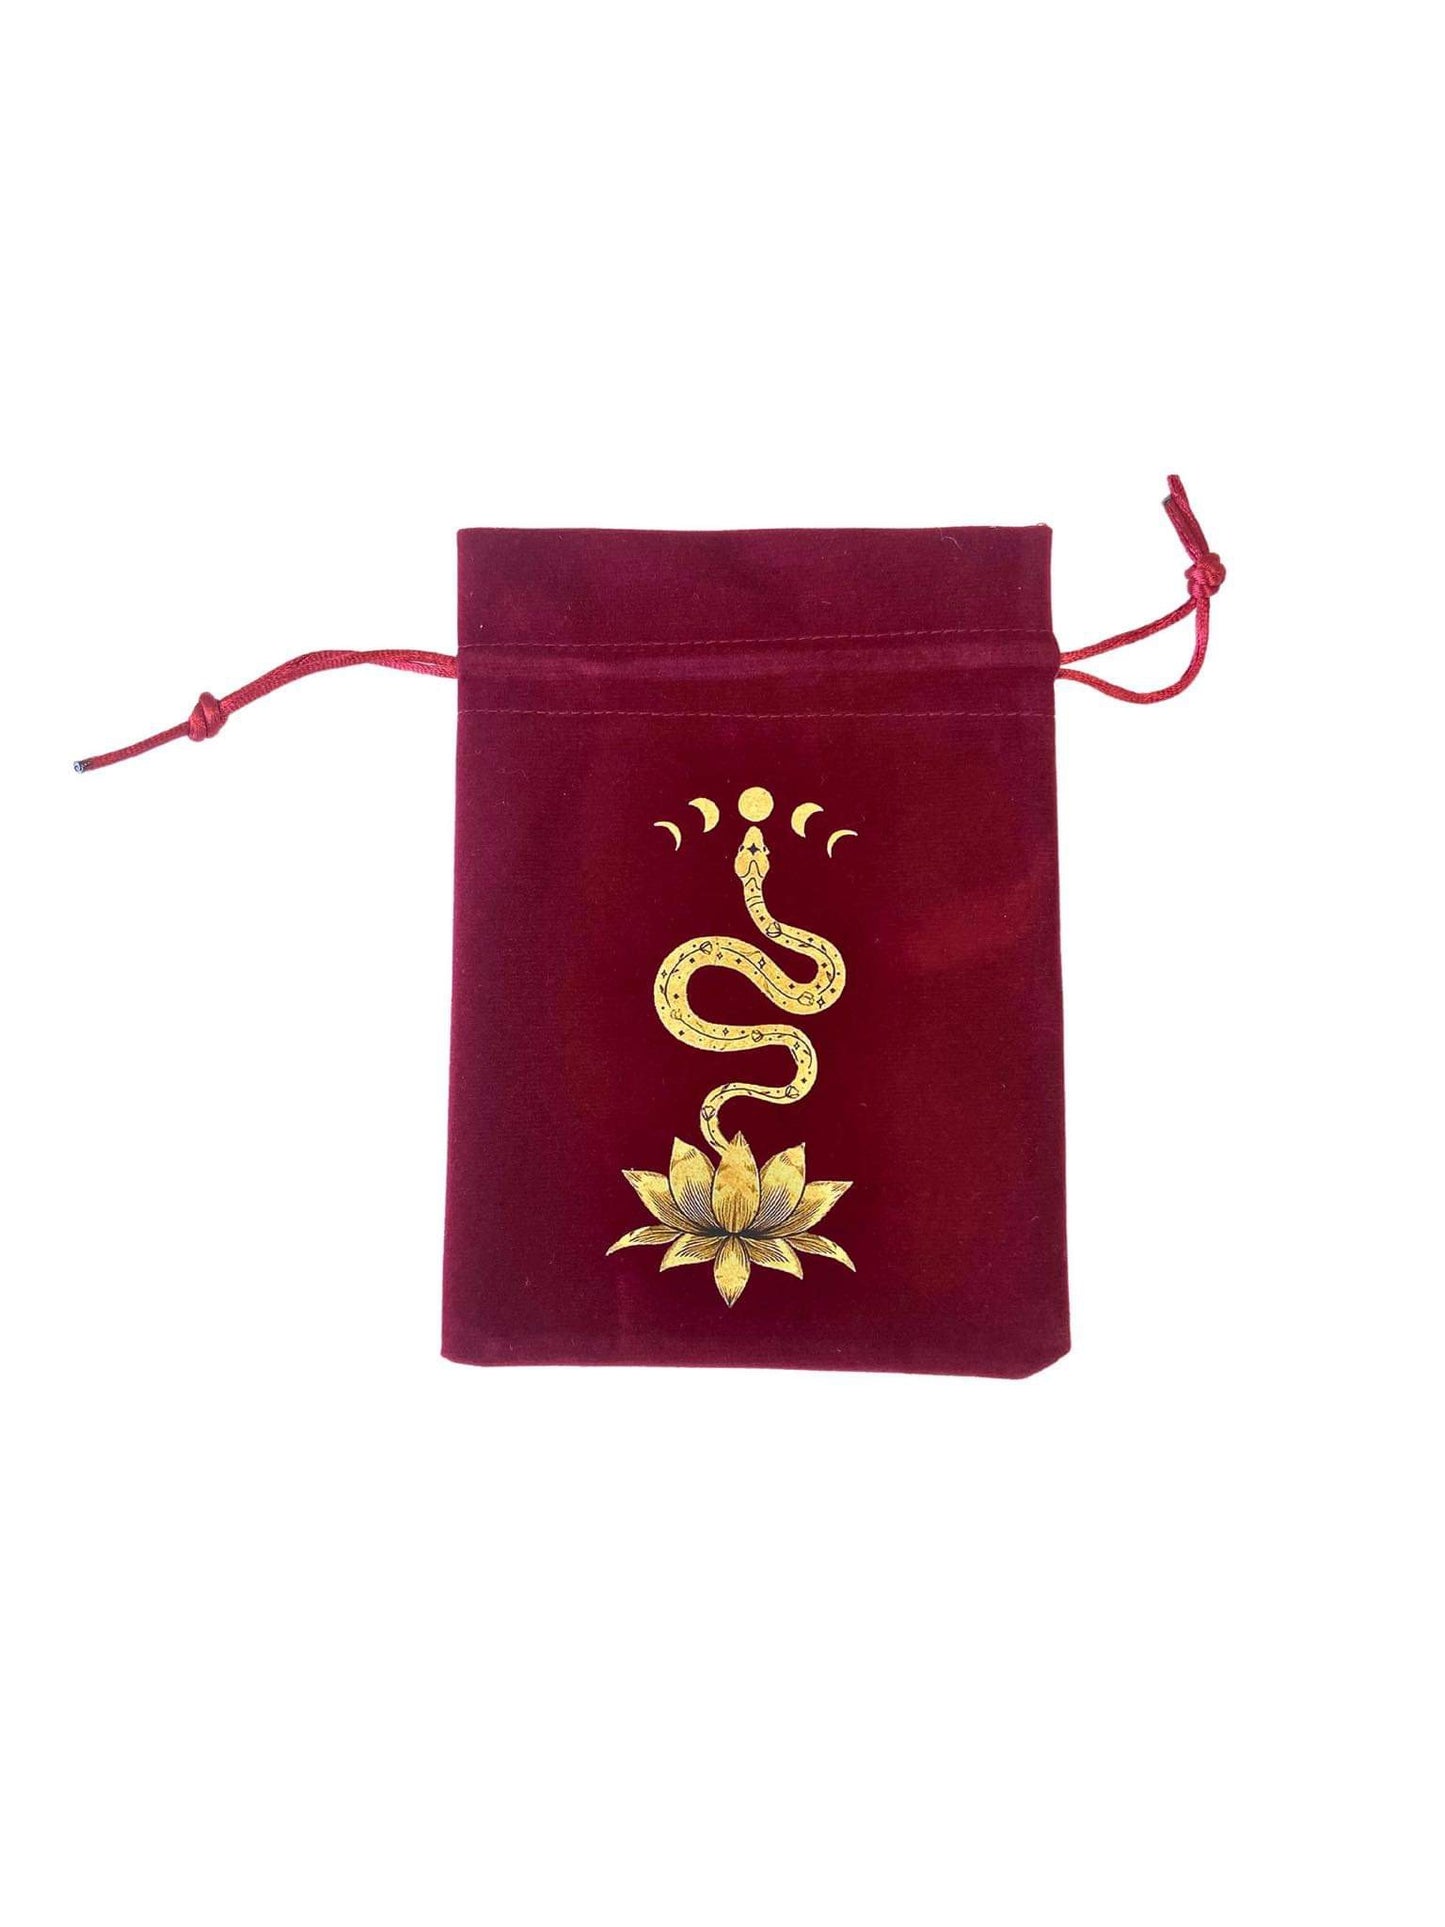 Medium Burgundy Velvet Bag with Design